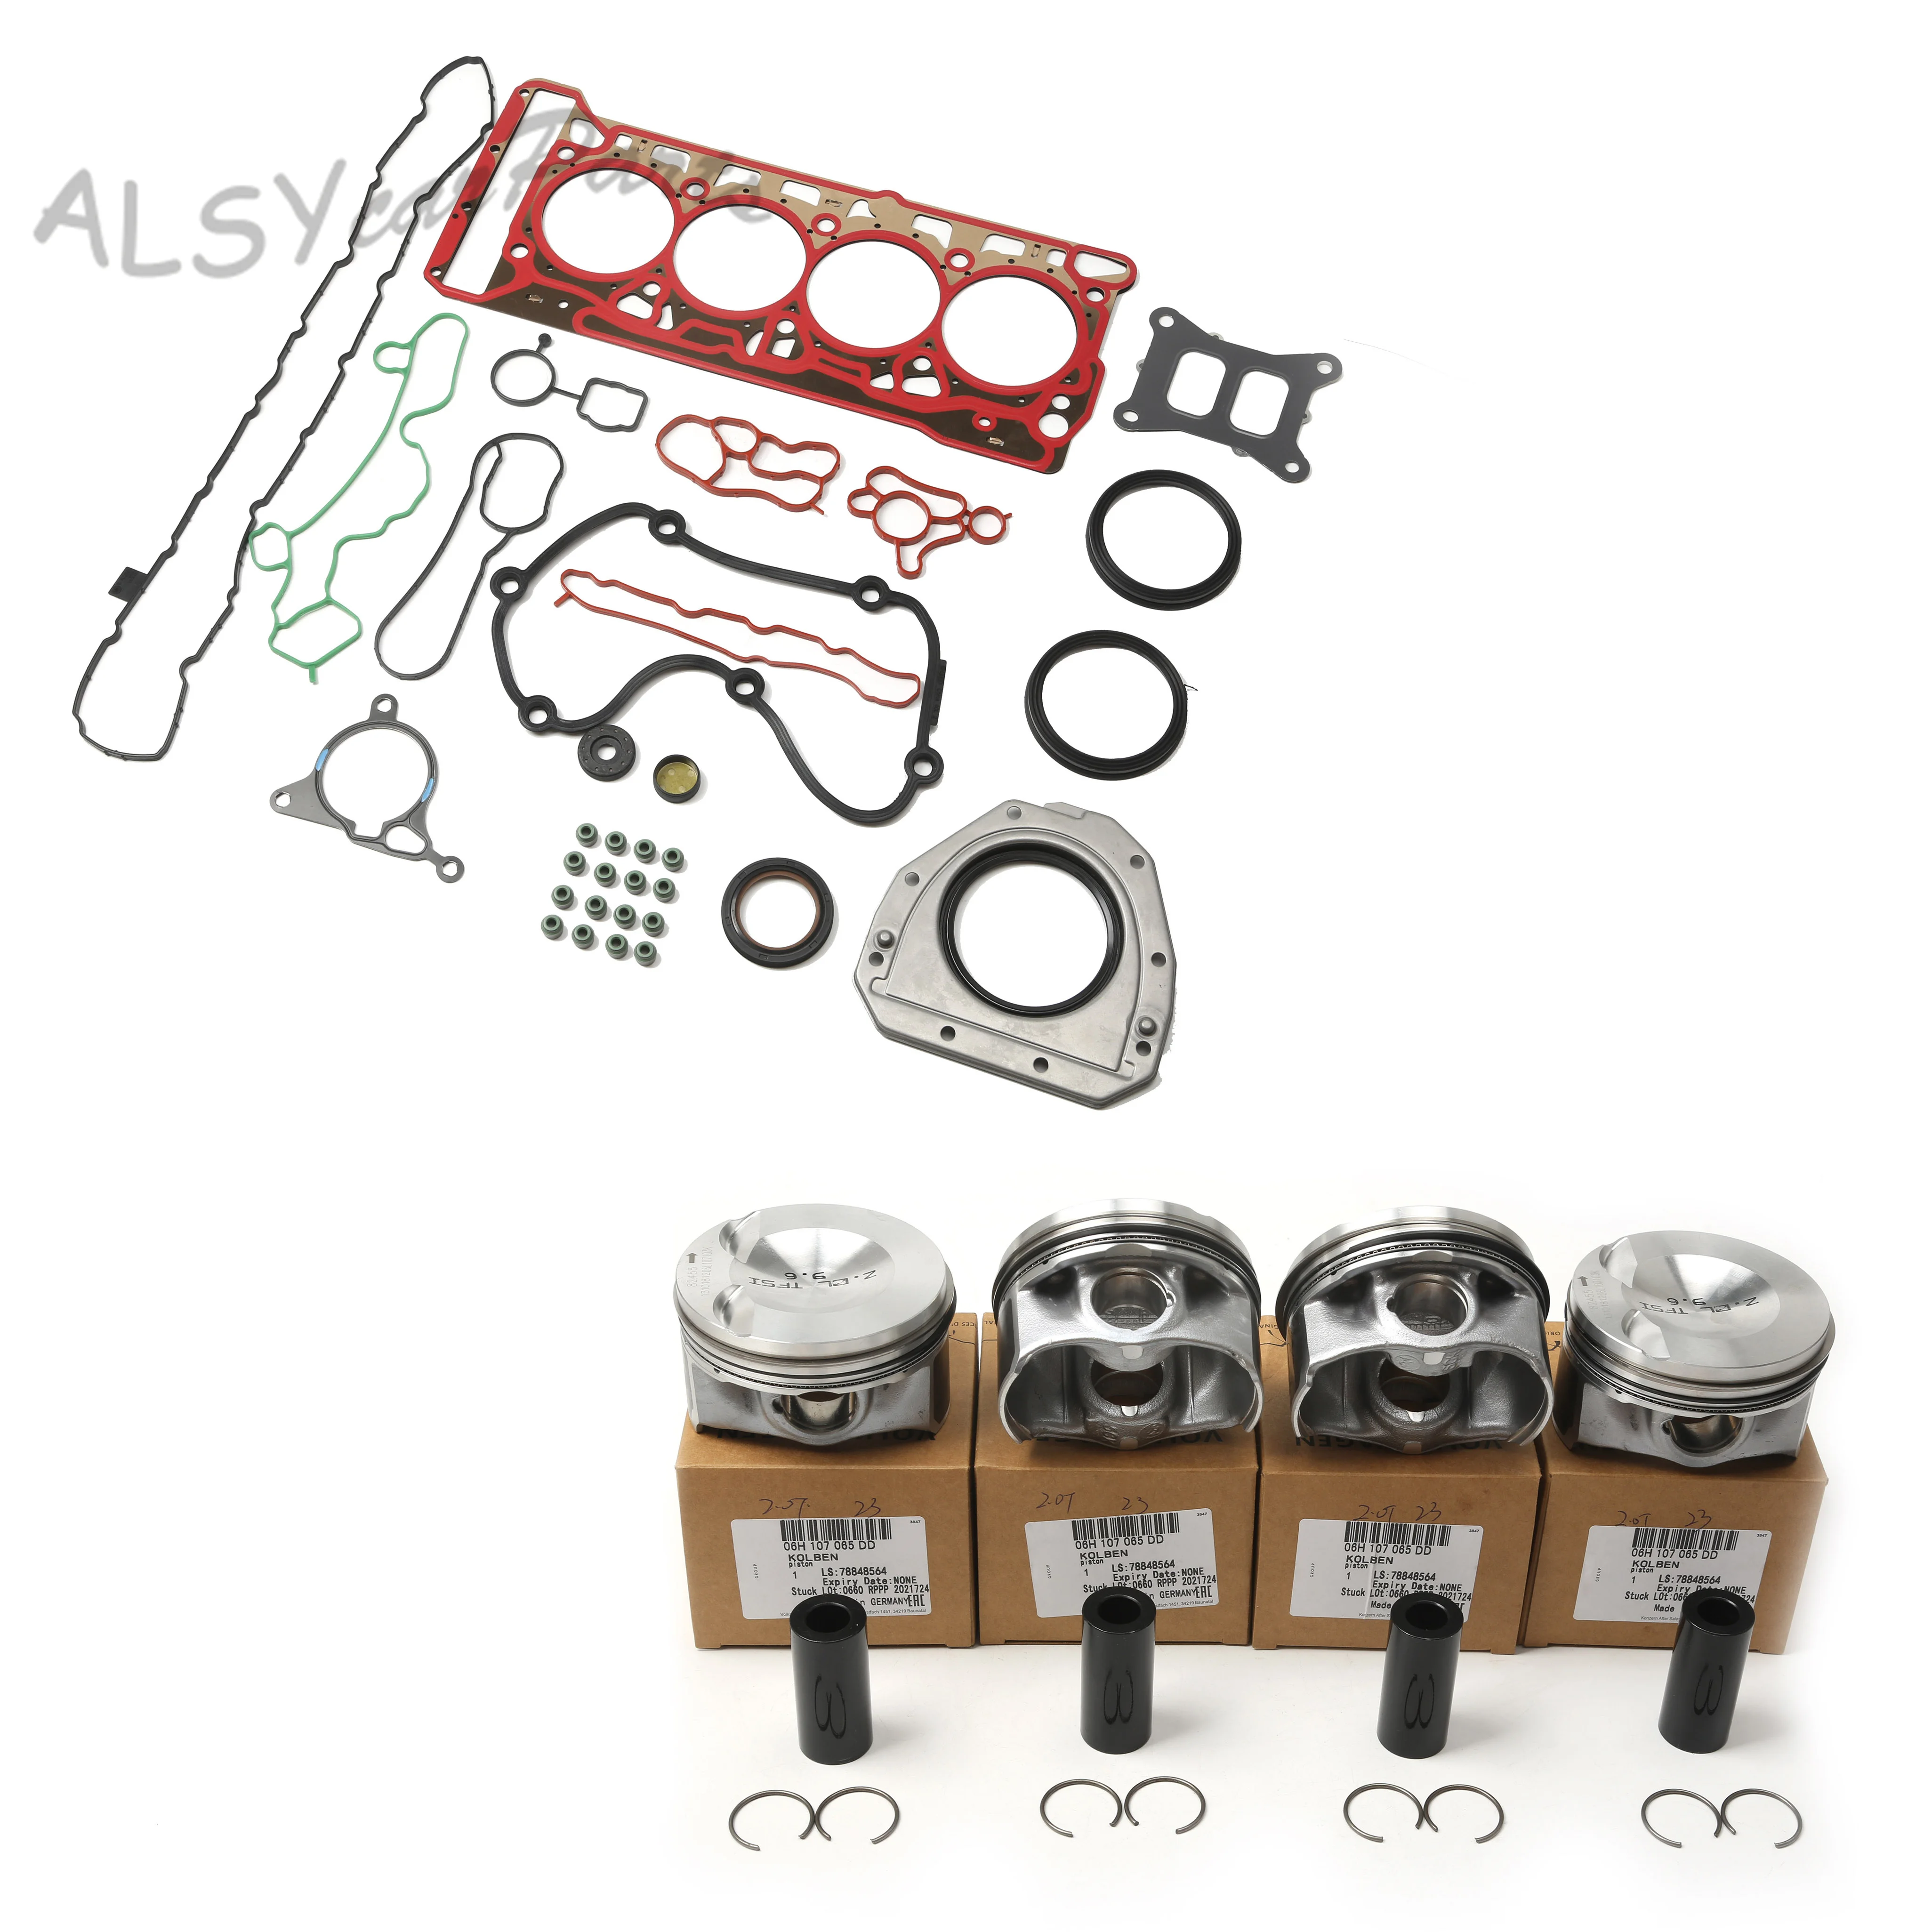 

New Modified Engine Overhaul Piston & Ring Kit Gasket Seals For VW Tiguan Passat Beetle Audi A3 A4 A5 Q5 Q7 TT 2.0TFSI Pin 23mm